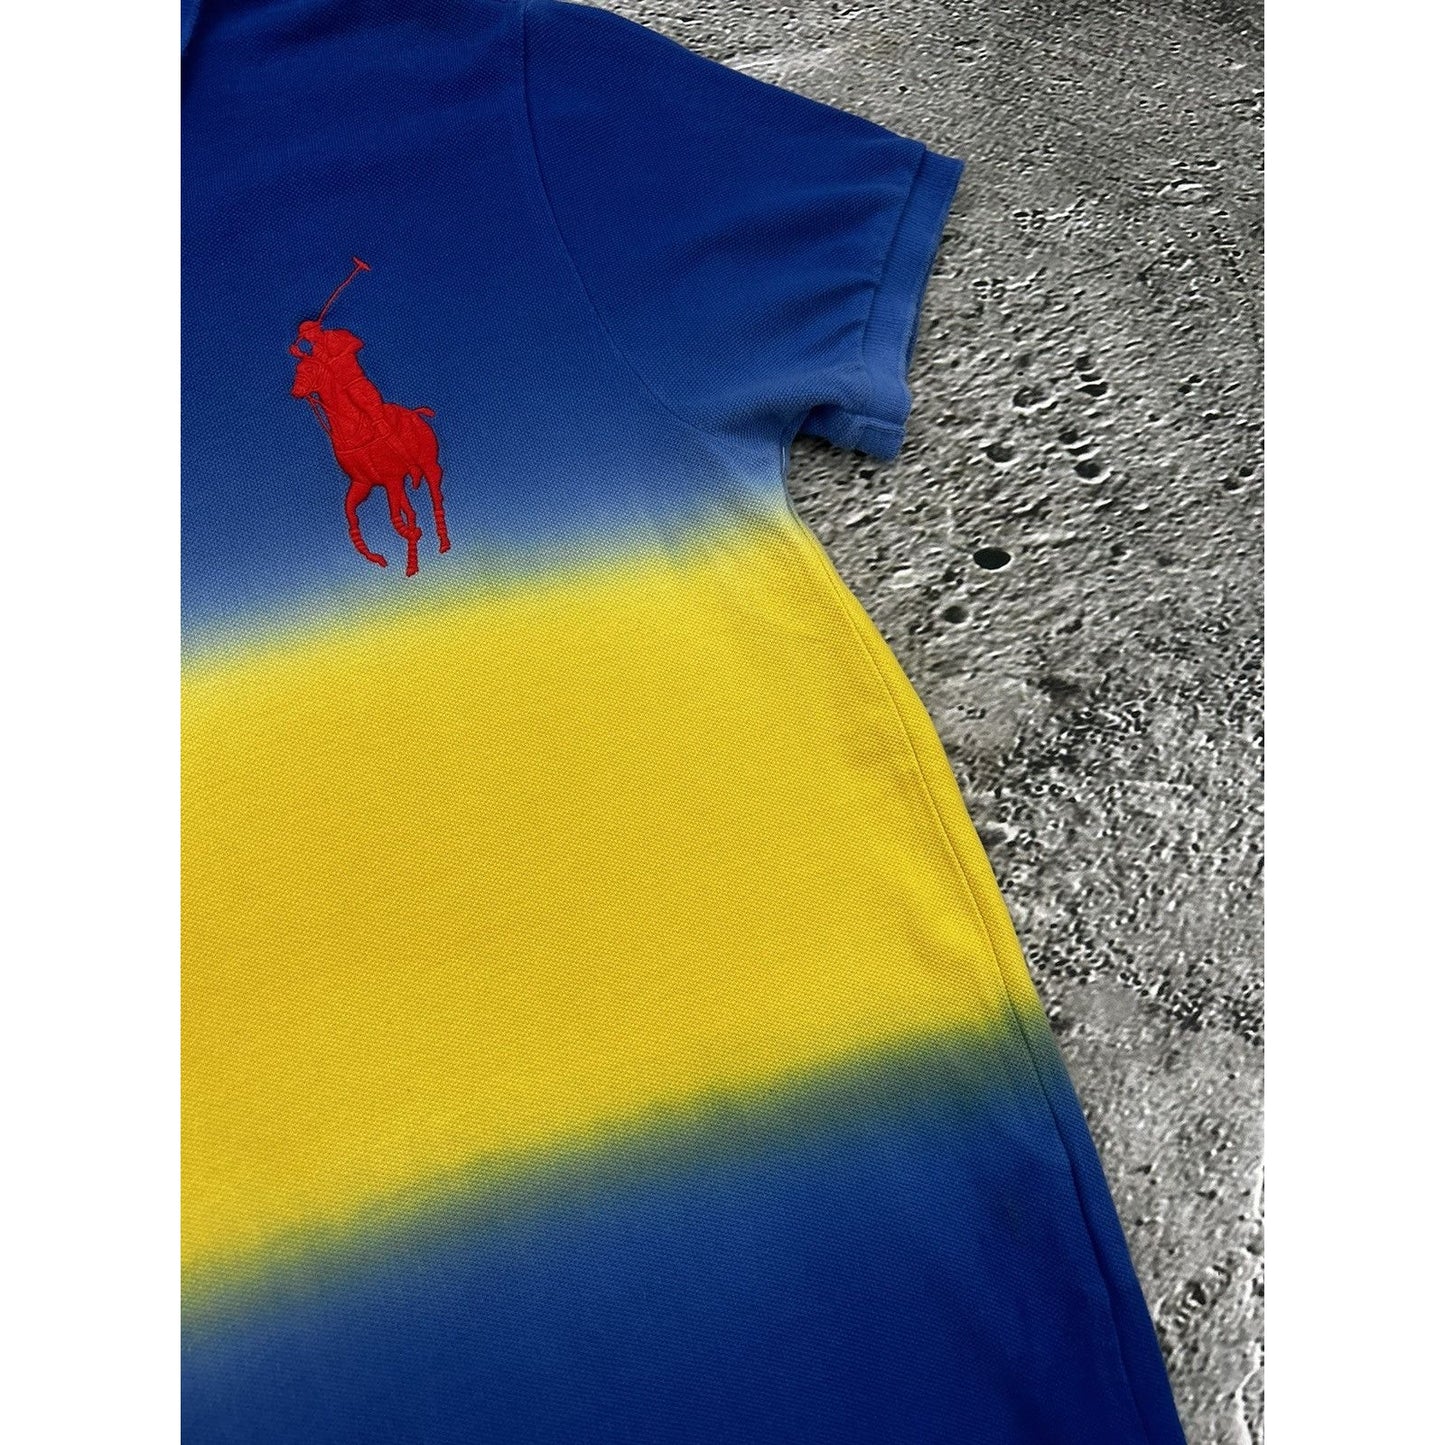 Chief Keef Polo Ralph Lauren big pony gradient blue yellow